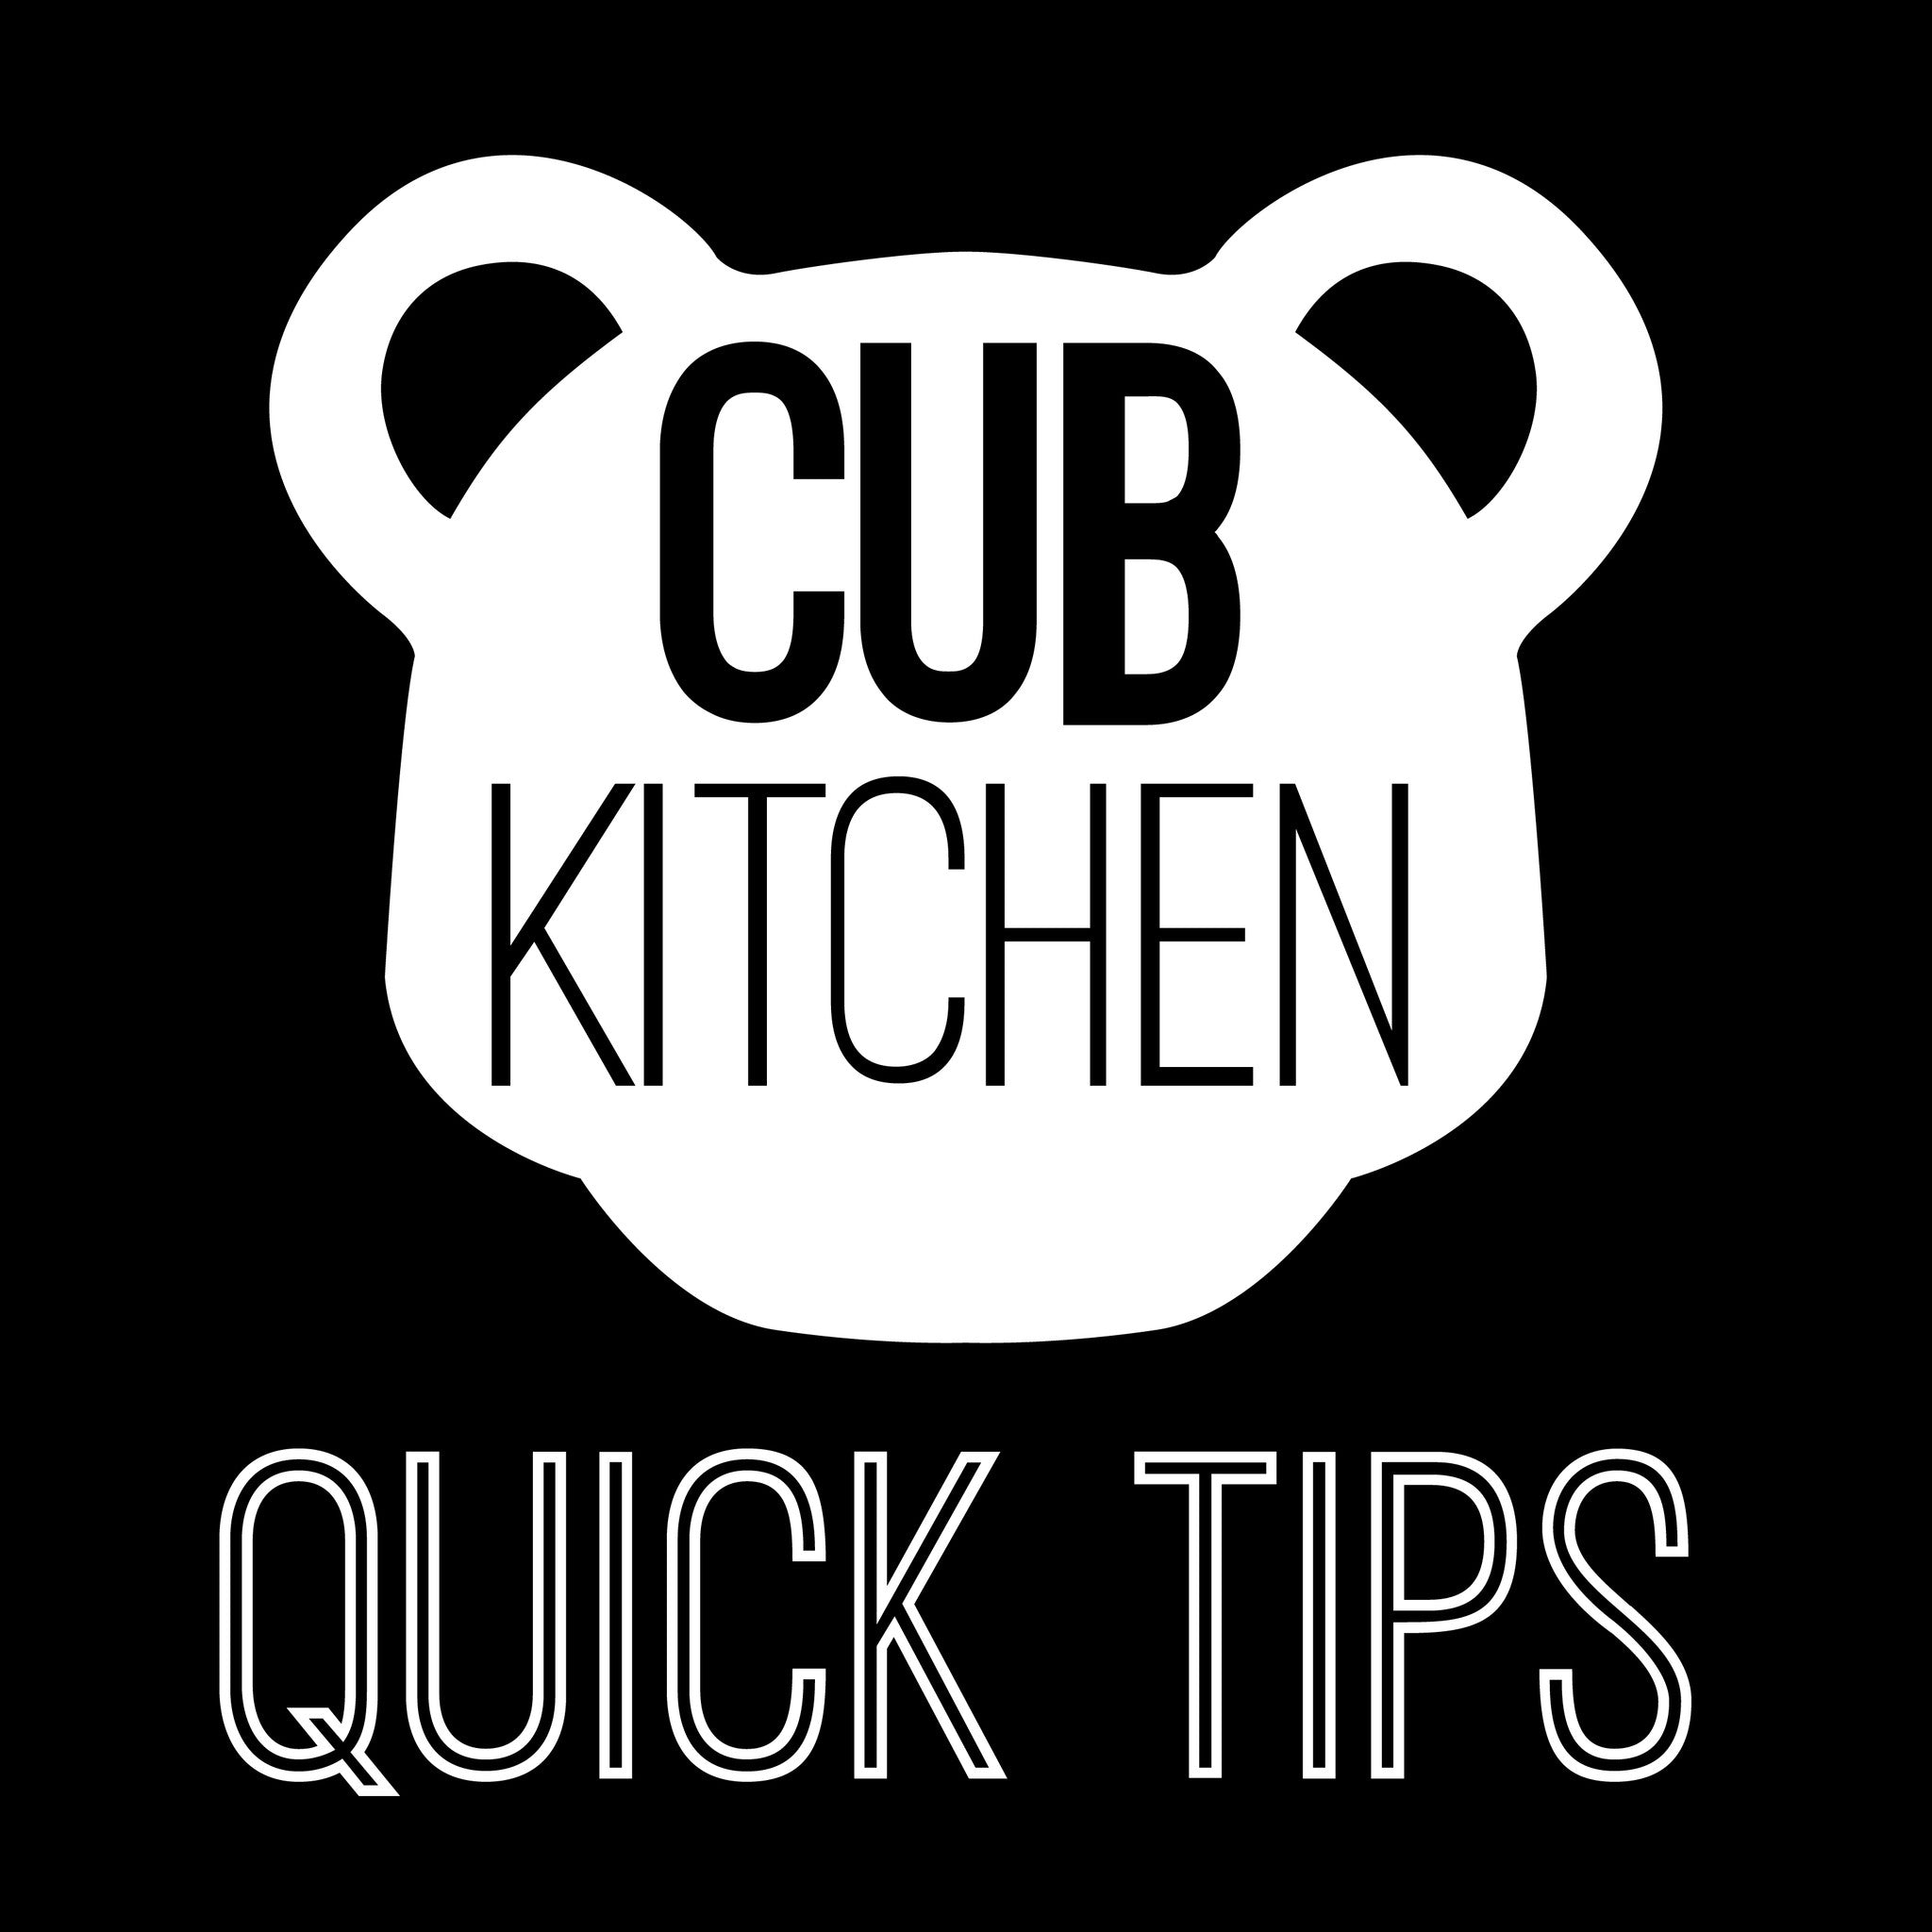 CUB KITCHEN - QUICK TIPS - STINKY SPONGE